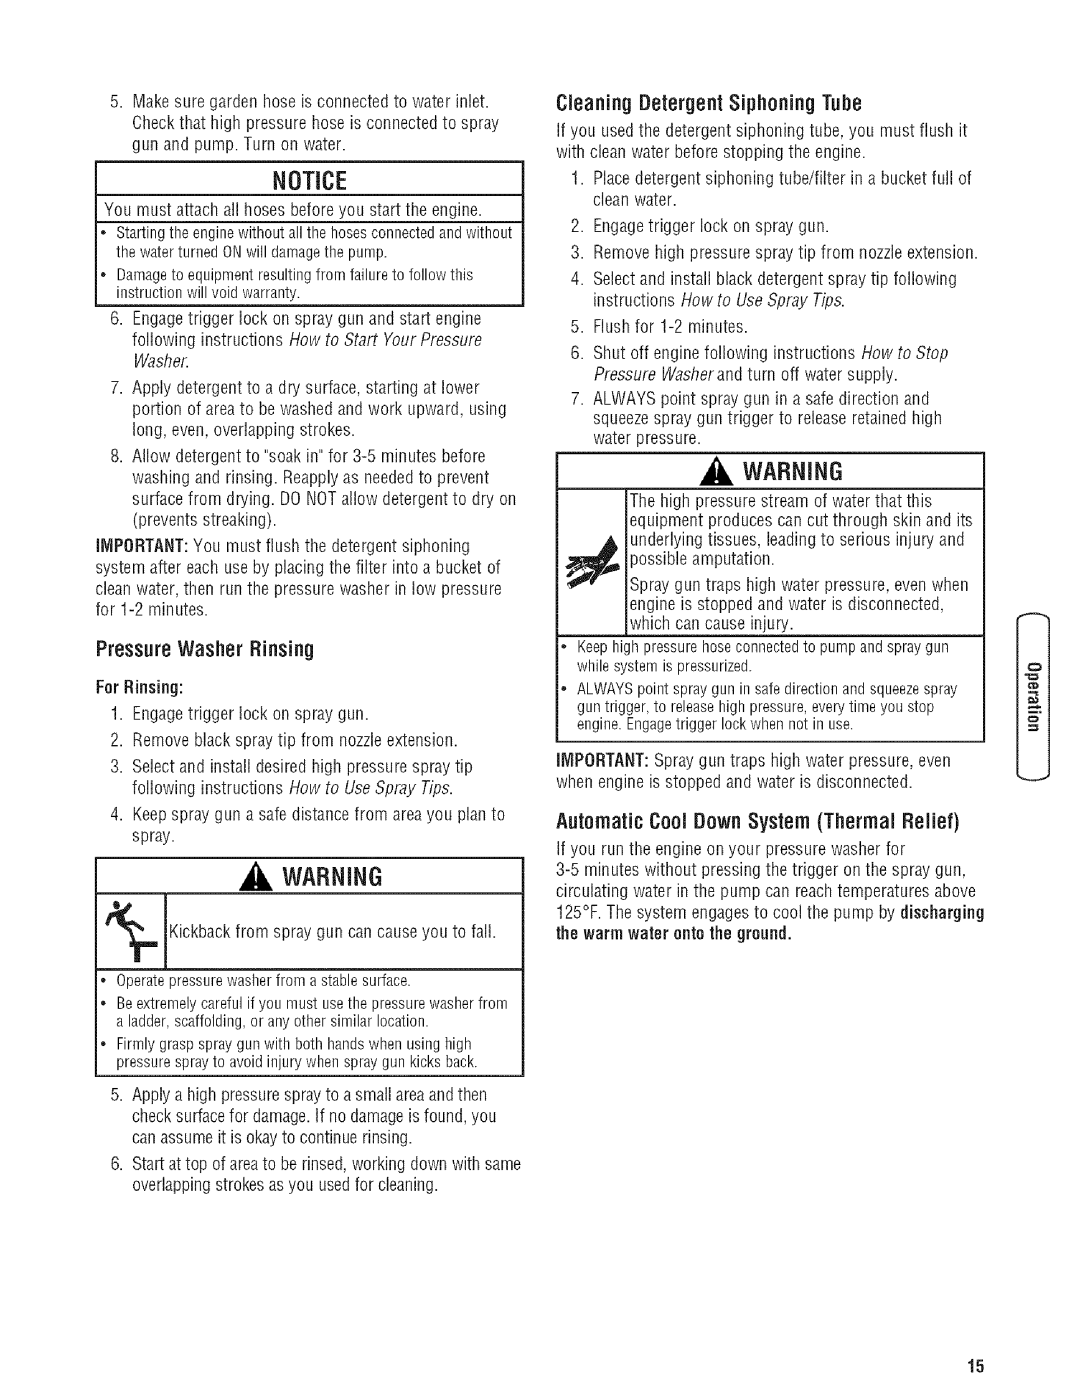 Troy-Bilt 203779GS manual Notice, PressureWasher Rinsing, Cleaning Detergent Siphoning Tube 